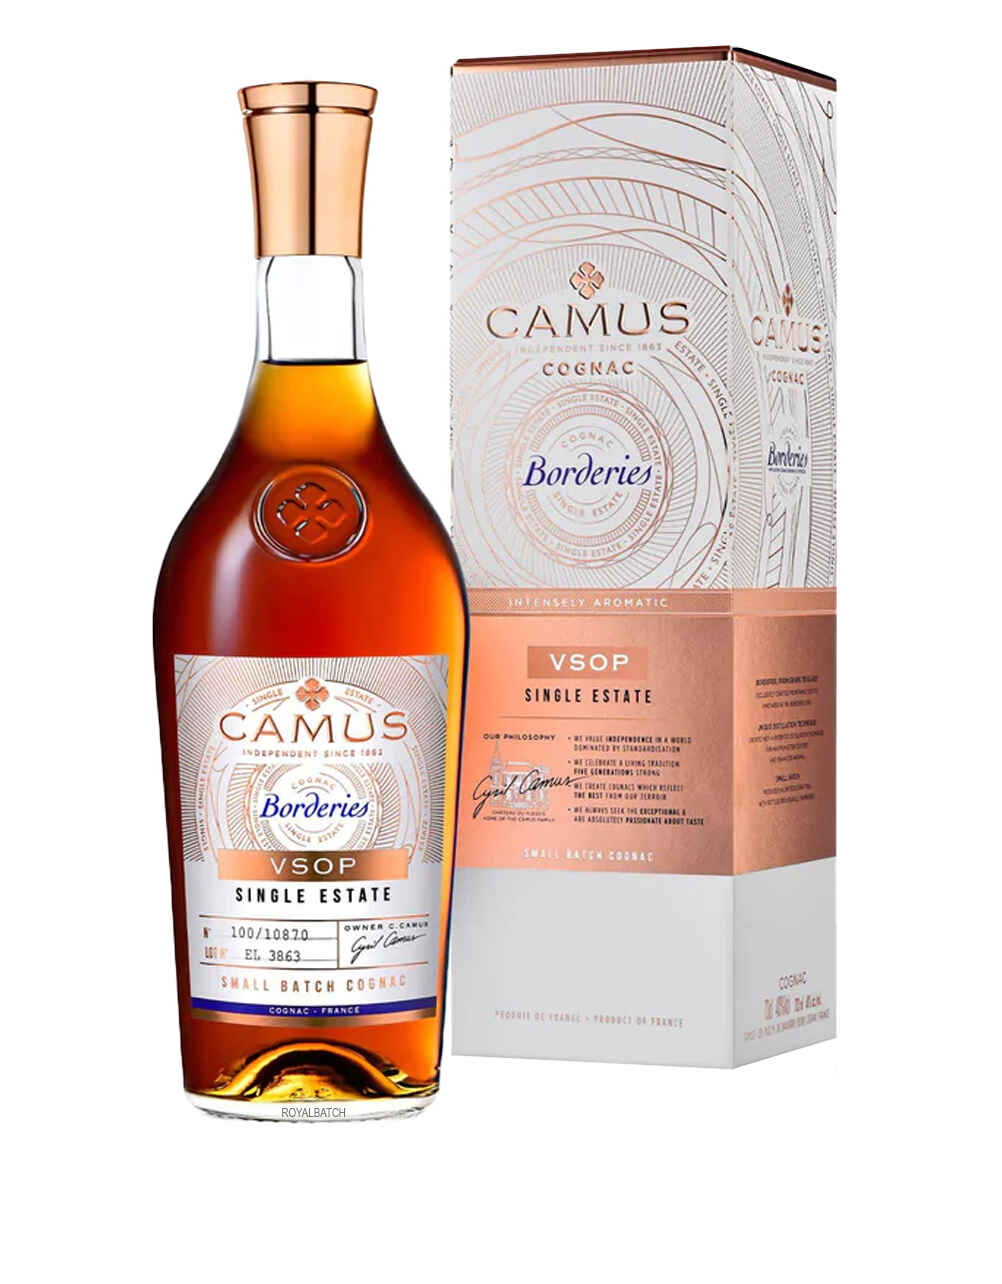 Camus VSOP Single State Borderies Small Batch Cognac